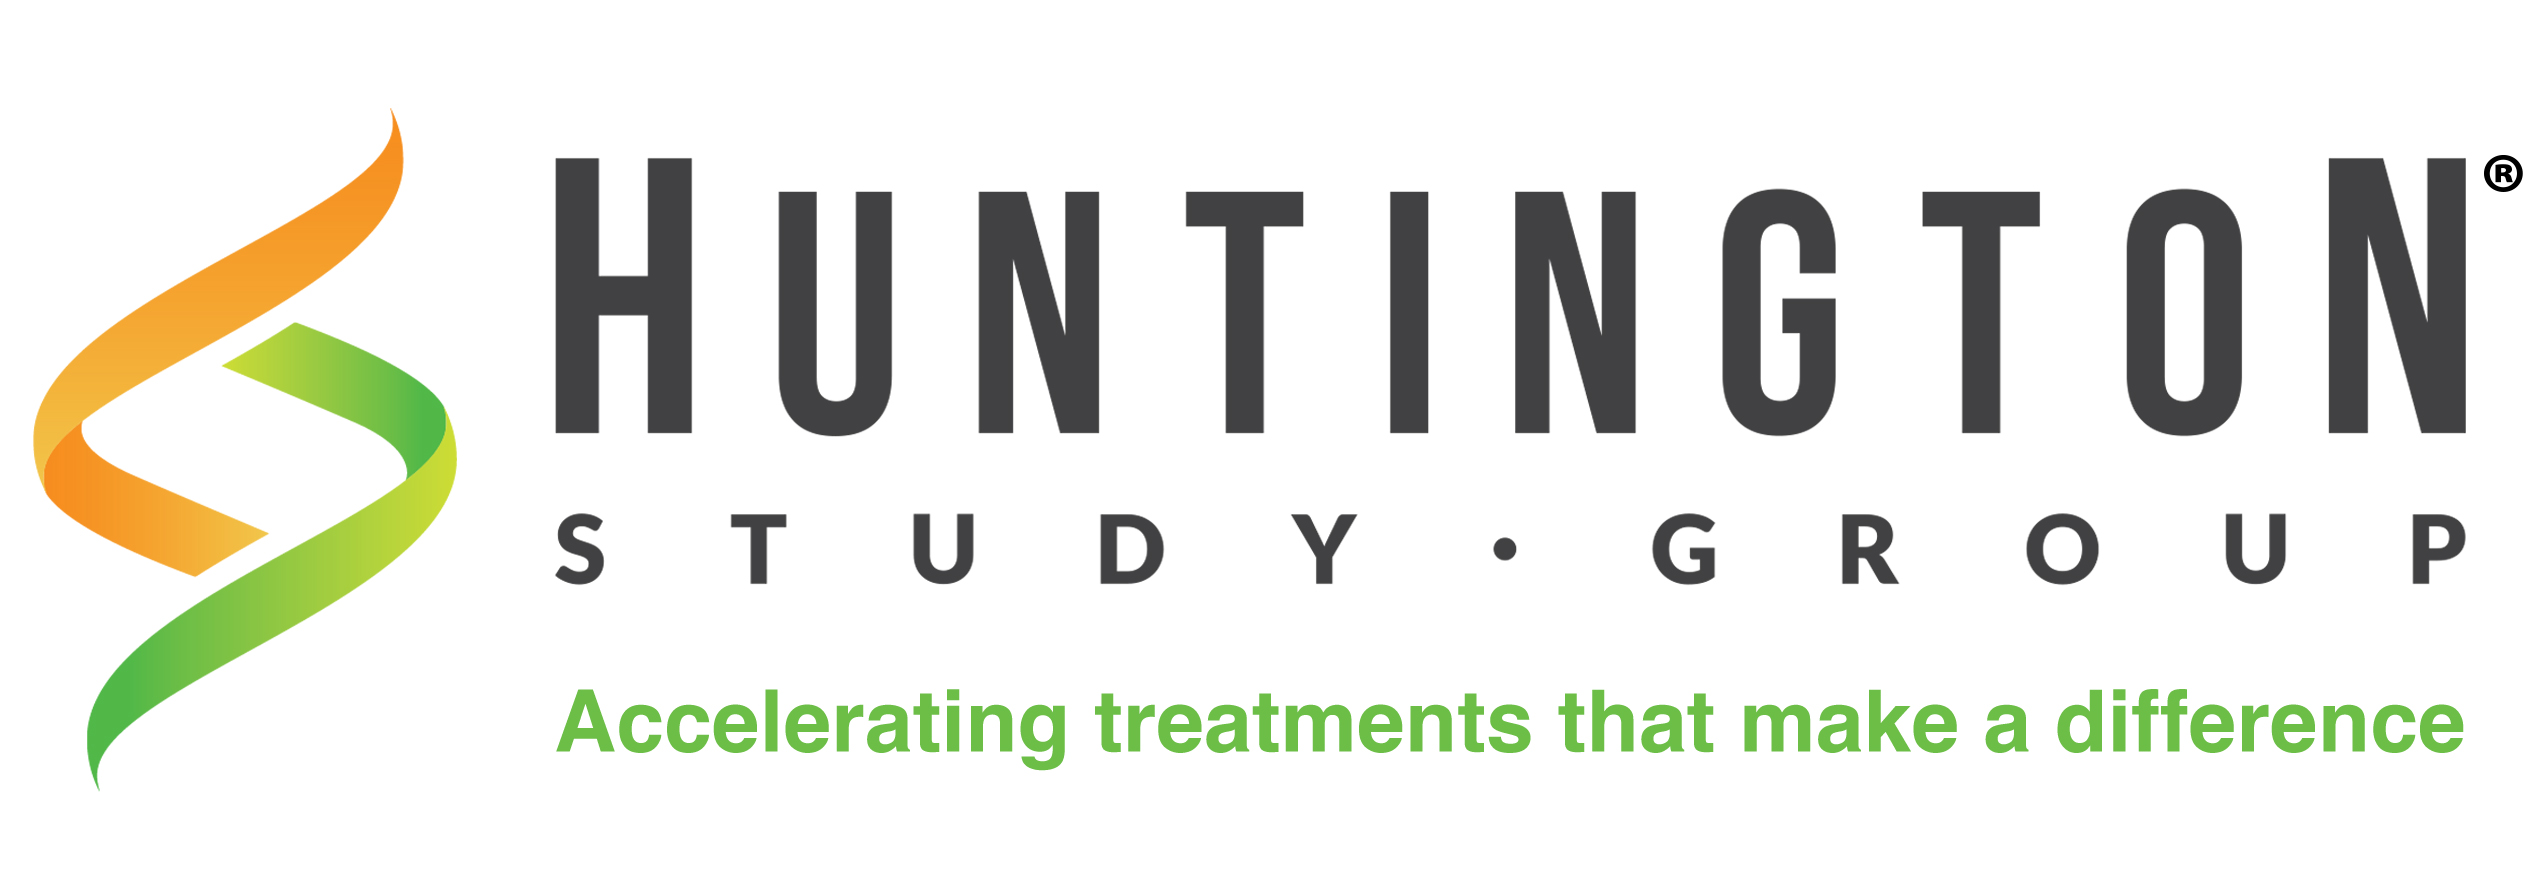 Huntington Study Group Announces Positive Topline Results for Virtual Unified Huntington’s Disease Rating Scale® (vUHDRS®) Study